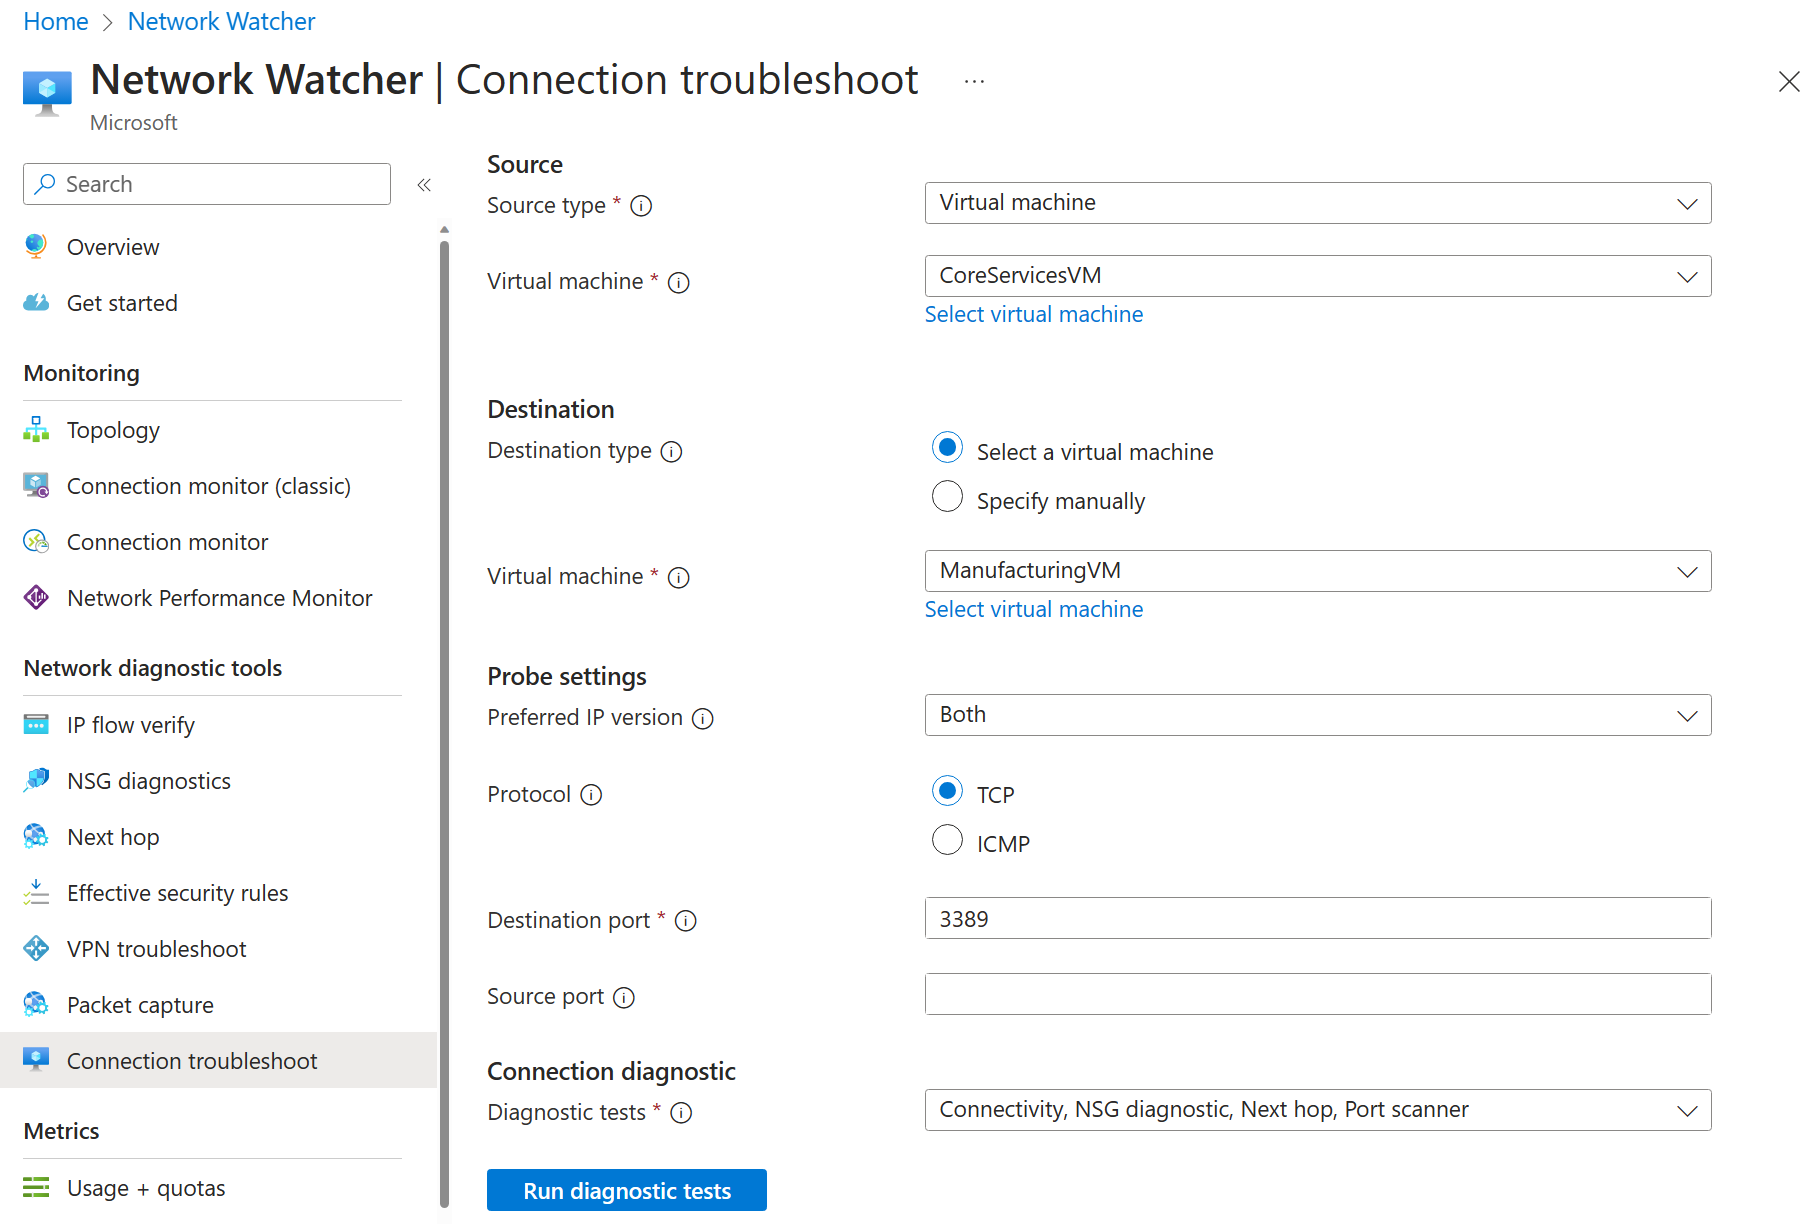 Azure Portal showing Connection Troubleshoot settings.